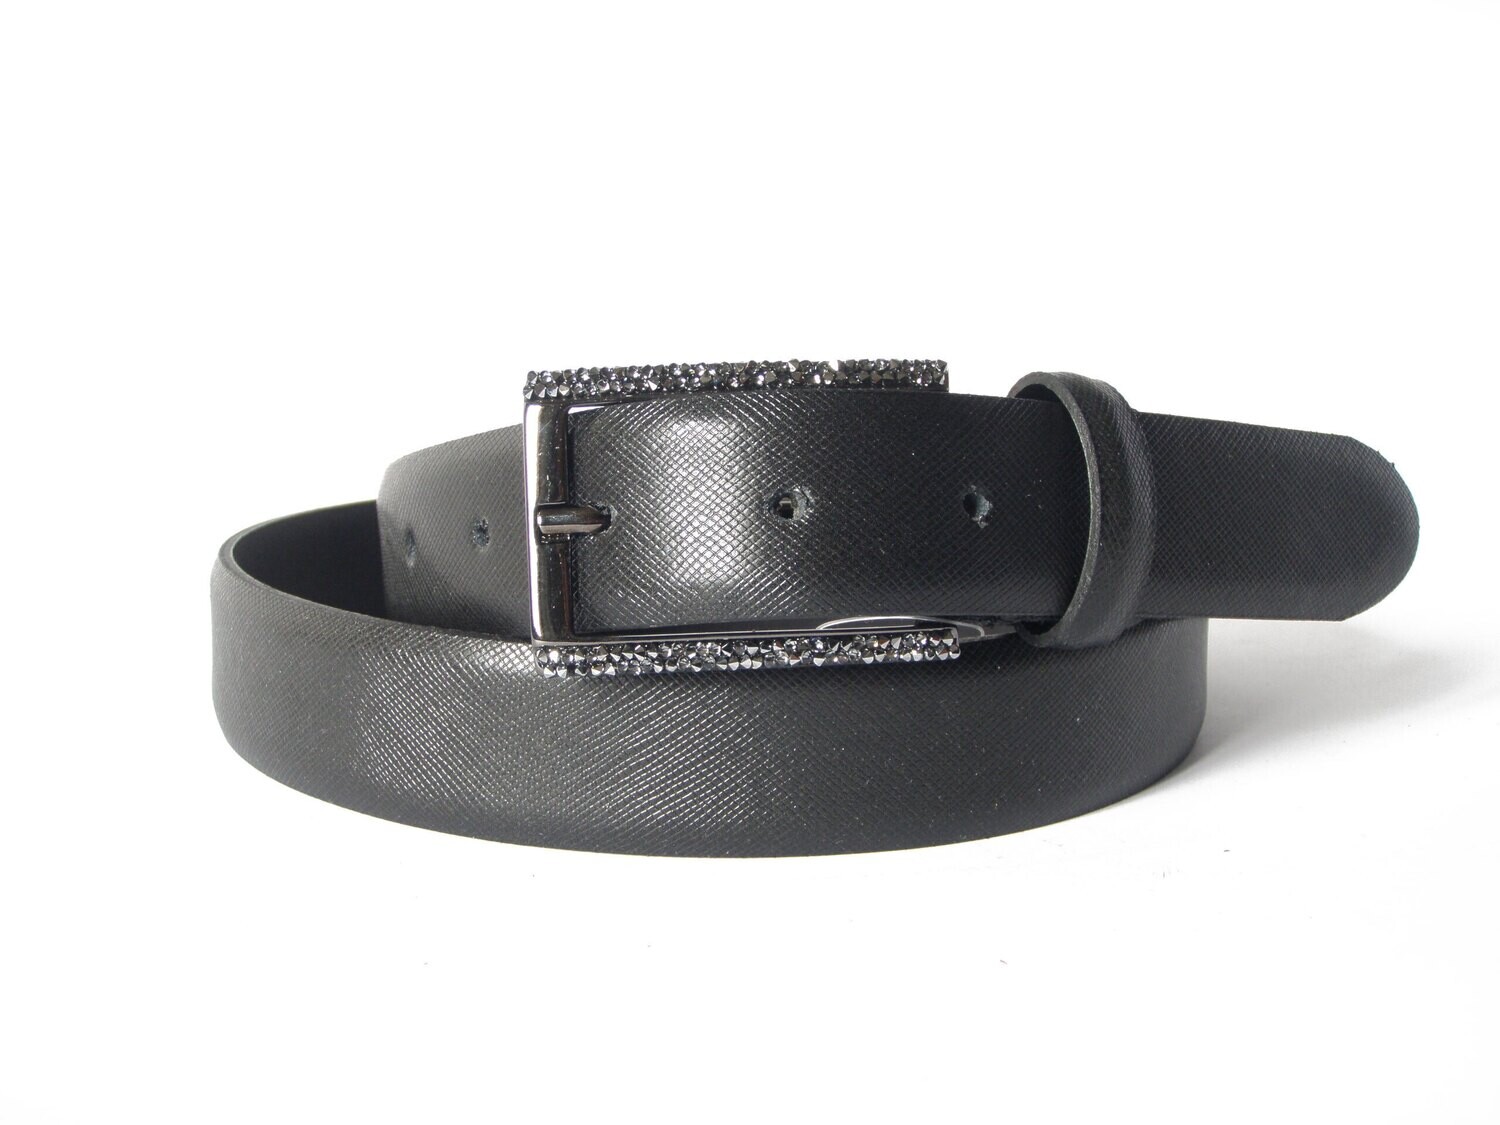 Cintura donna Edoardo Cincotti in pelle stampata colore nero, COLORE: Nero, TAGLIA CINTURA DONNA: CM.90/105 - TG. 42/46